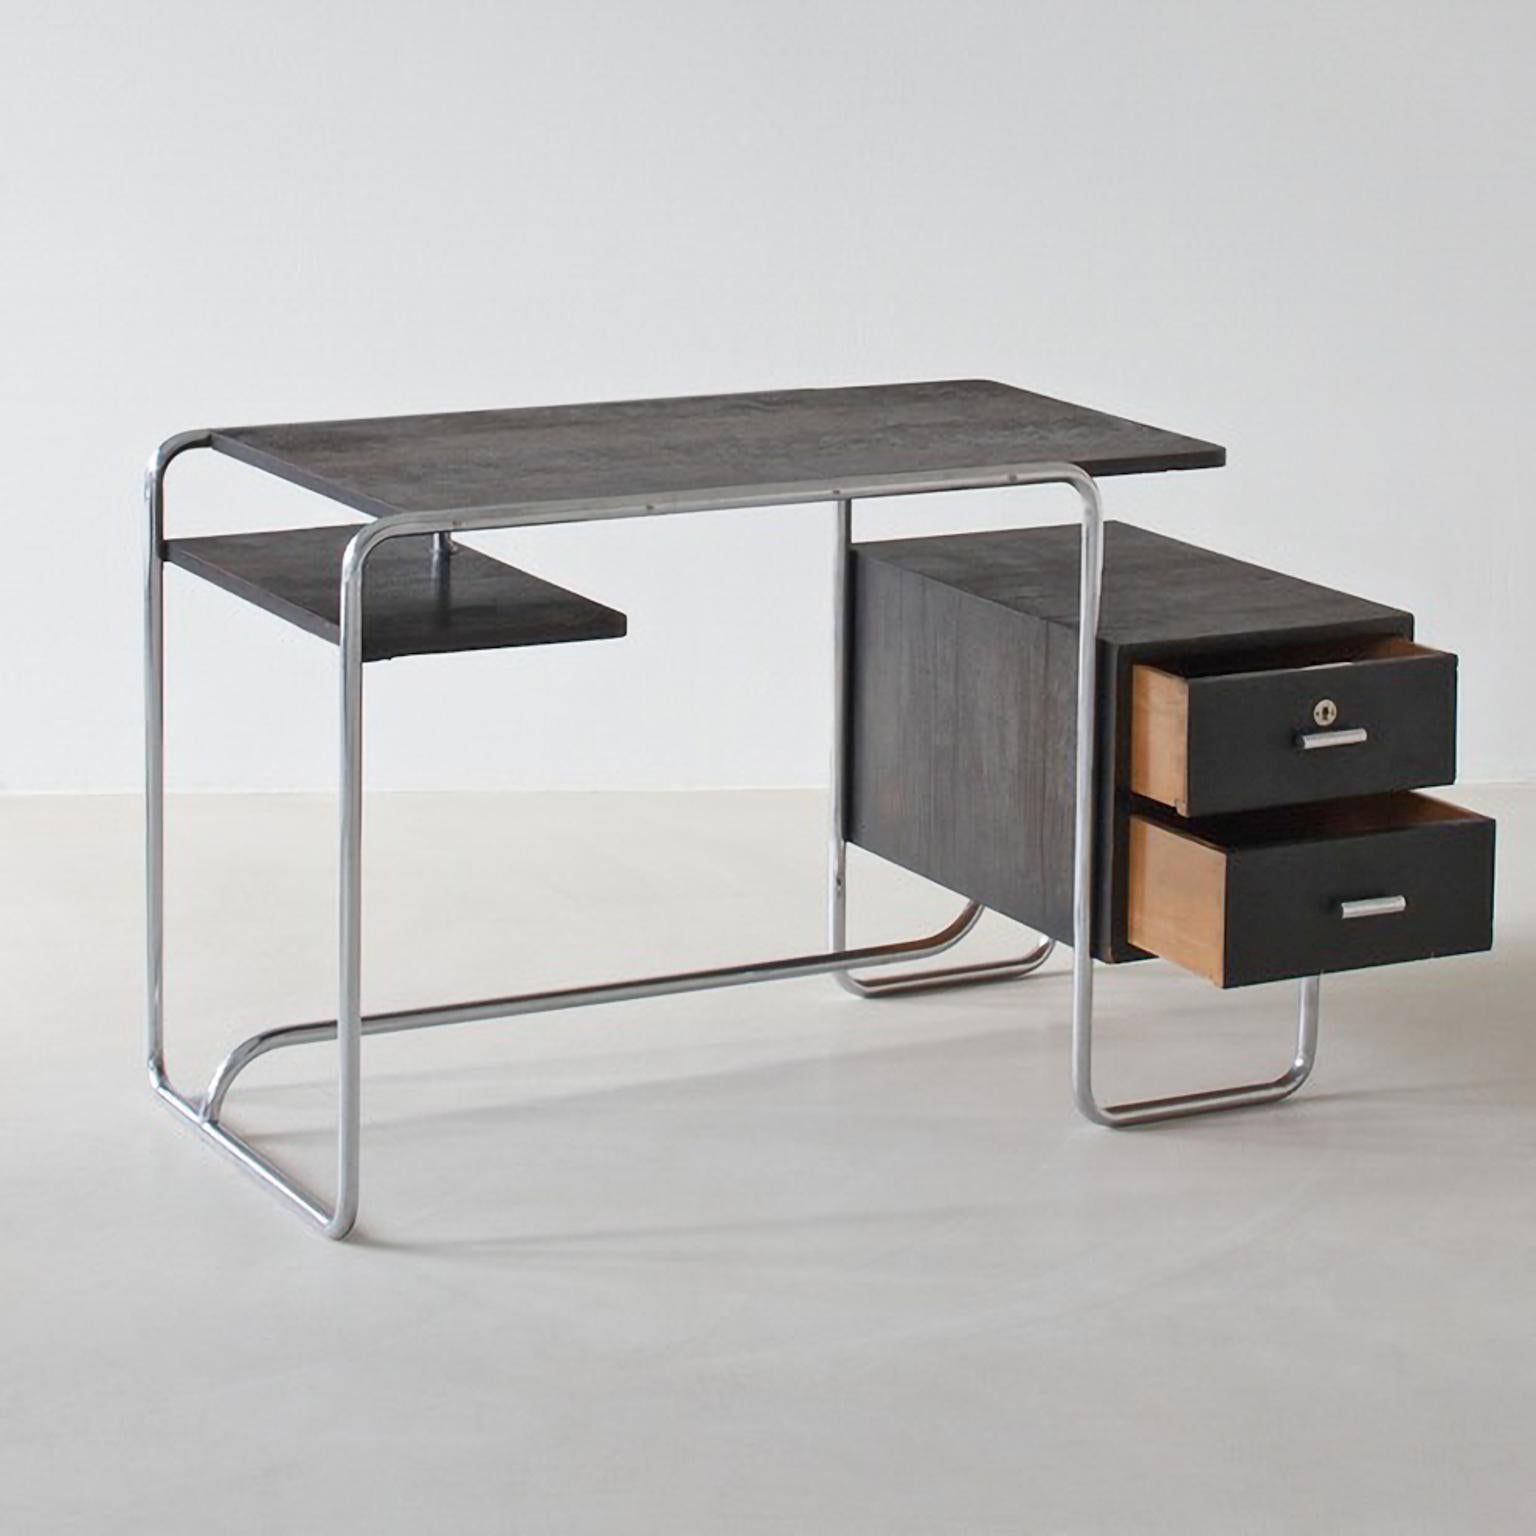 Bauhaus Modernist Tubular Steel Desk, Stained Wood, Chromium Plated Metall, c. 1930 For Sale